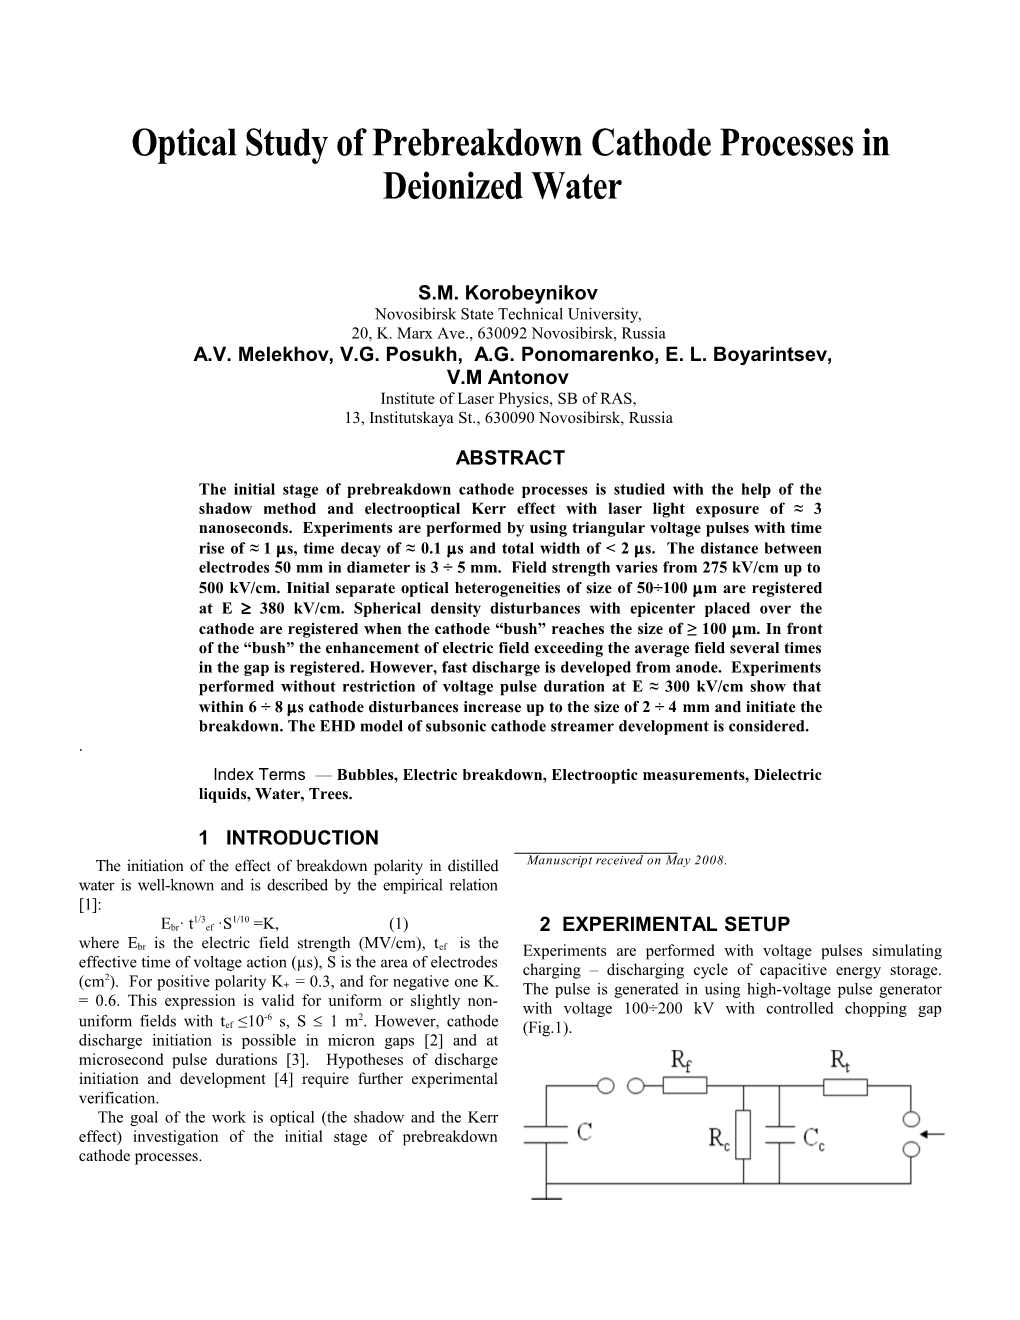 Optical Study of Prebreakdown Cathode Processes in Deionized Water